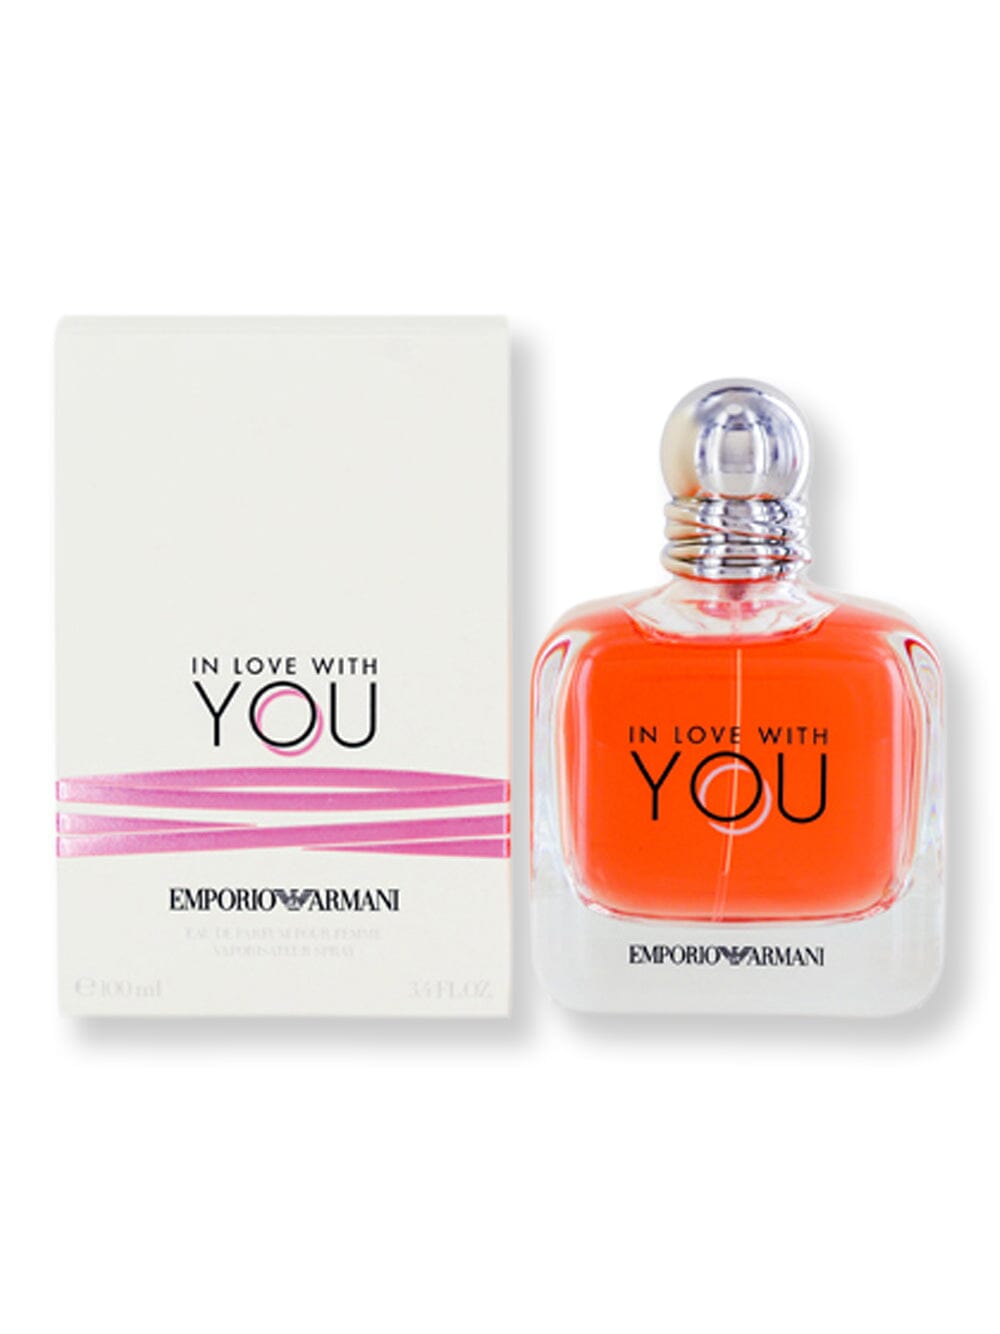 GIORGIO ARMANI GIORGIO ARMANI Emporio In Love With You EDP Spray 3.4 oz100 ml Perfume 